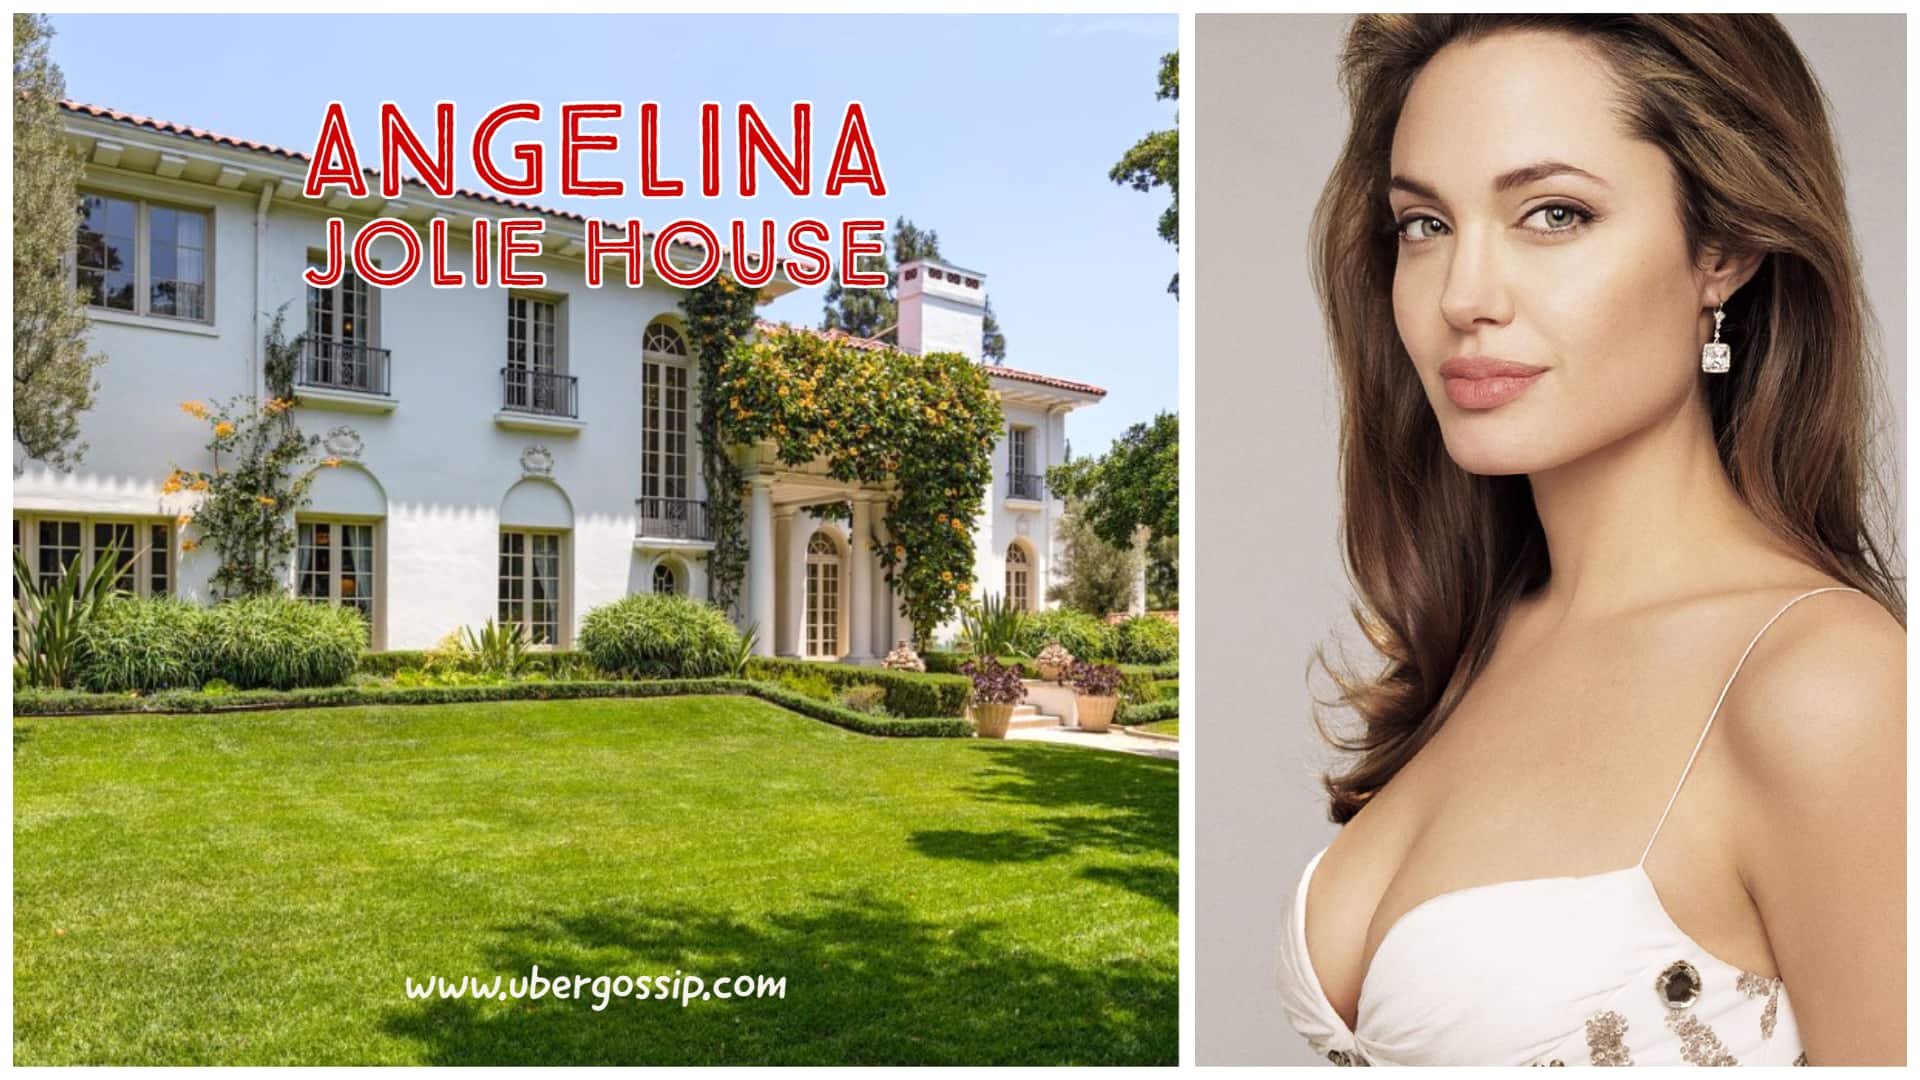 $25million Mansion Los Feliz, Angelina Jolie Home, Angelina Jolie House, Celebrity Homes, Celebrity House, Celebrity Lifestyle, Holiday House, Hollywood Home, Luxury Homes, Modern Hollywood Home